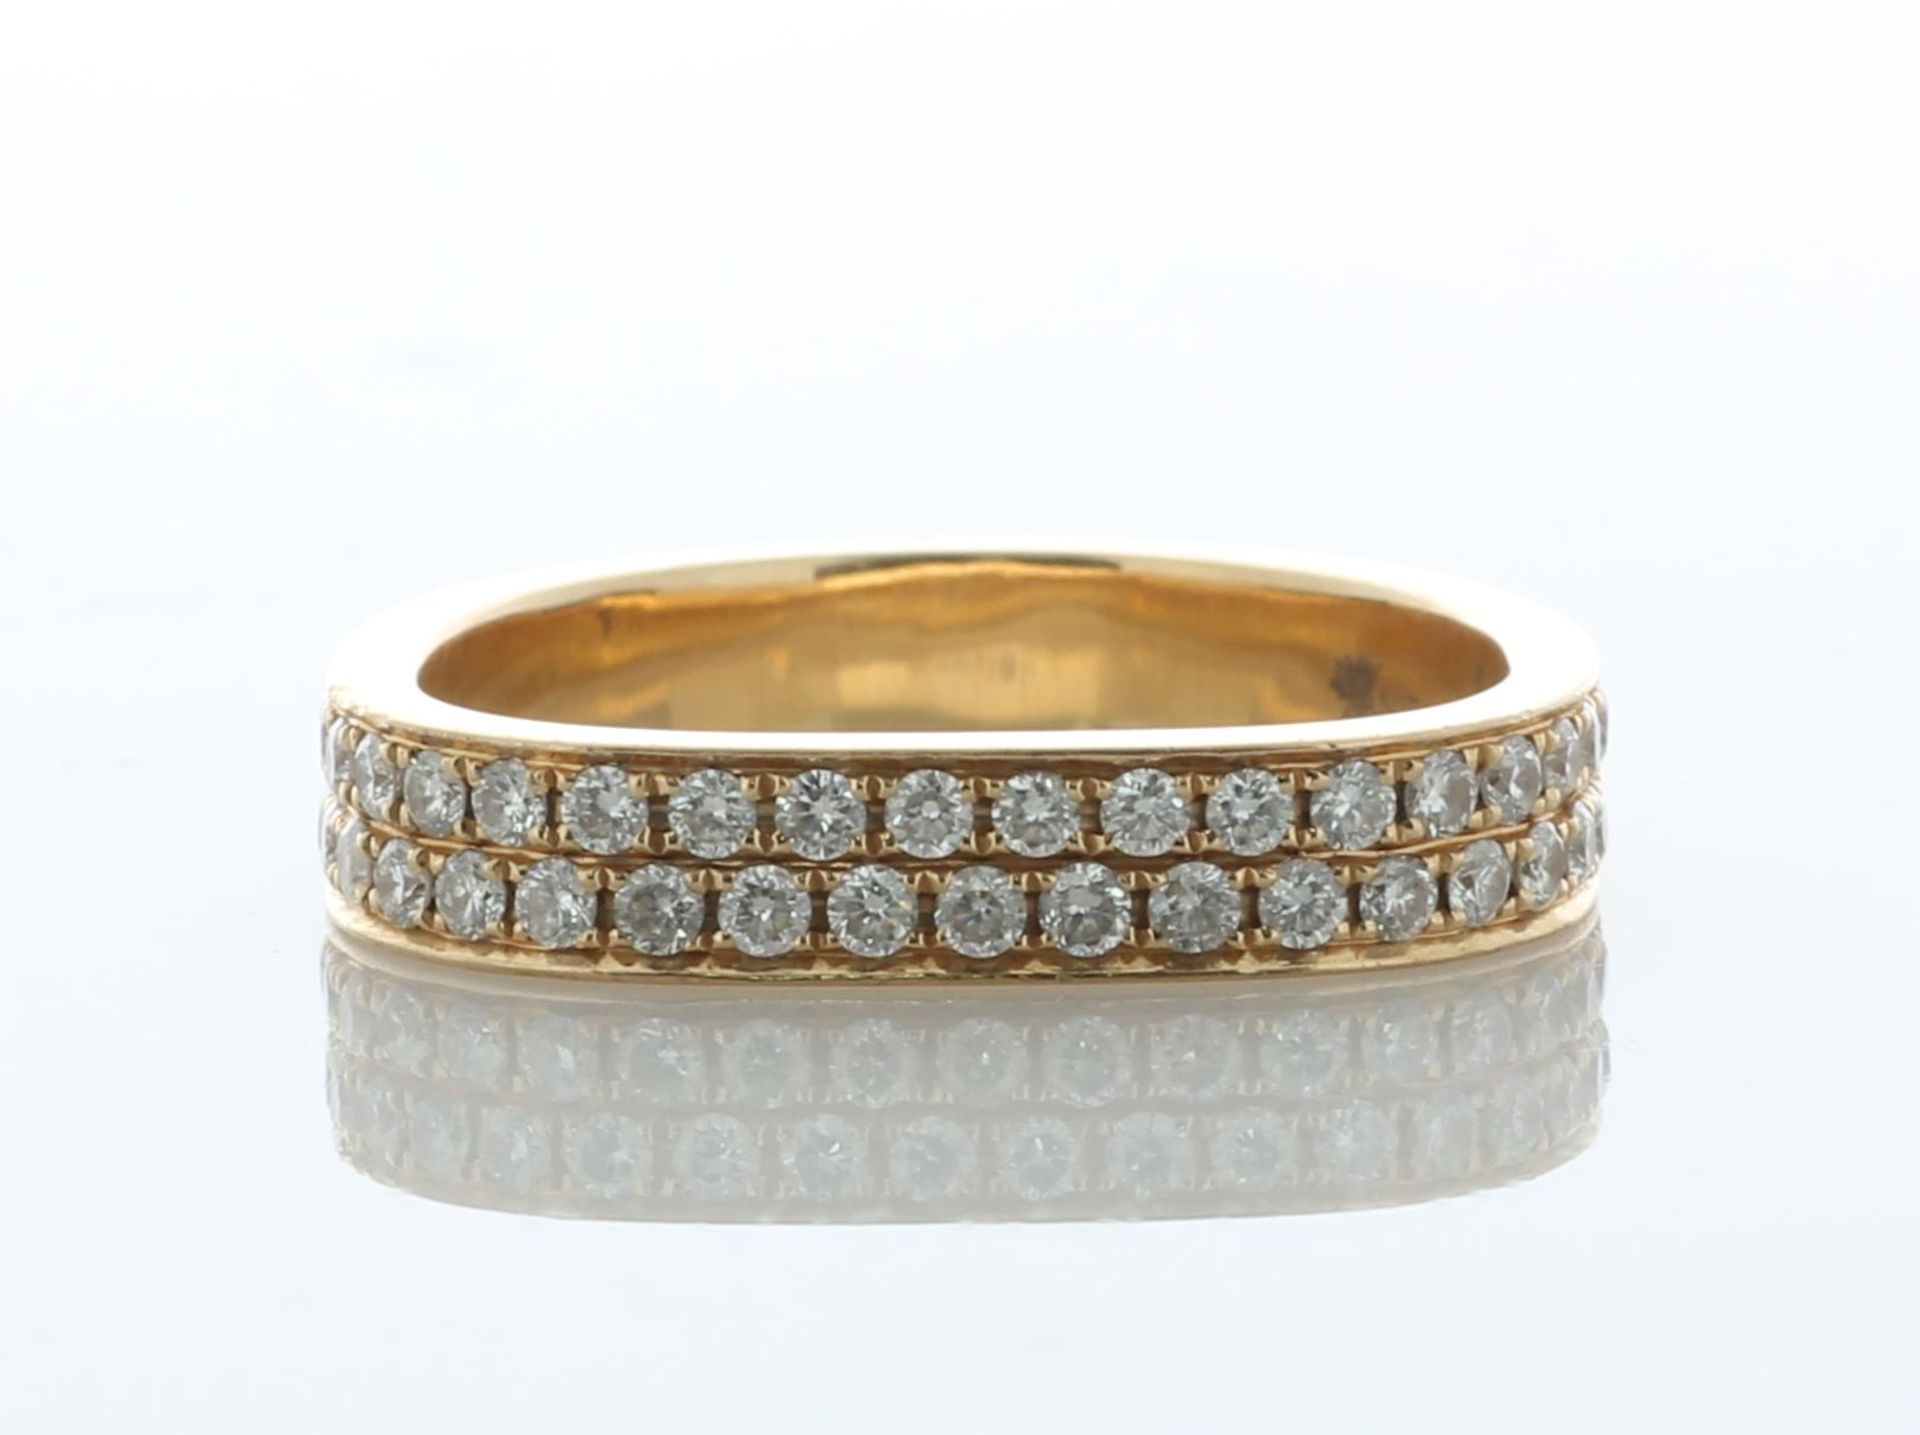 18ct Yellow Gold Diamond Half Eternity Anita Ko 'D' Ring 0.36 Carats - Valued By AGI £3,600.00 -